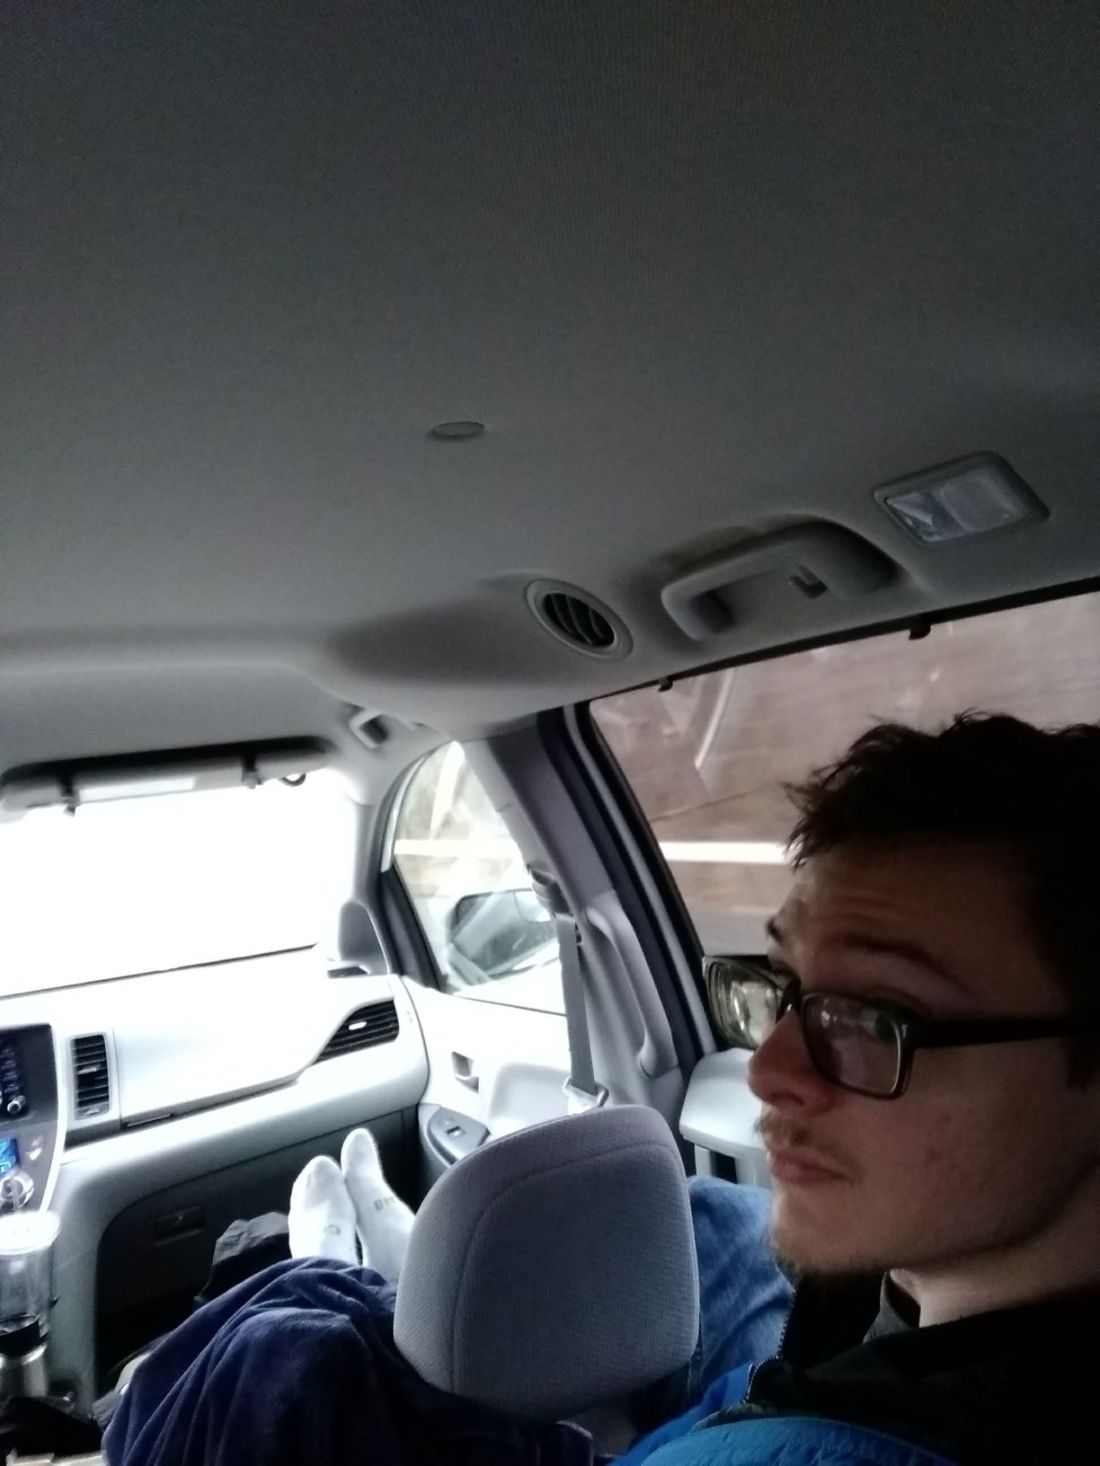 033019 David selfie in car.jpg